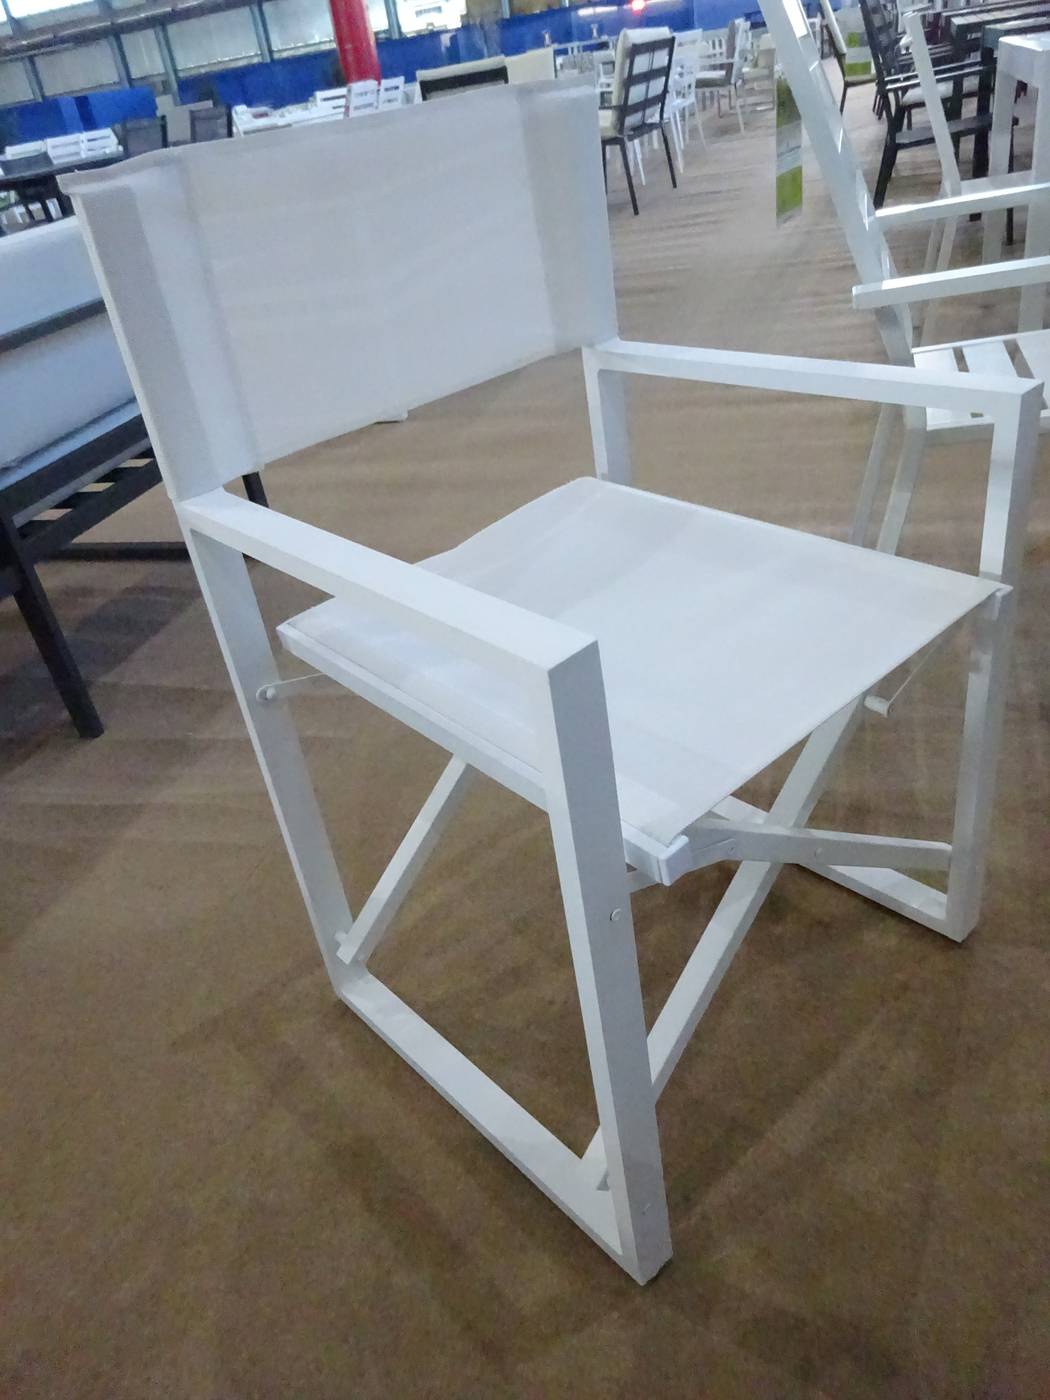 Sillón Director plegable Aluminio Sinara - Sillón de Director de aluminio plegable color blanco o antracita, con asiento y respaldo de textilen